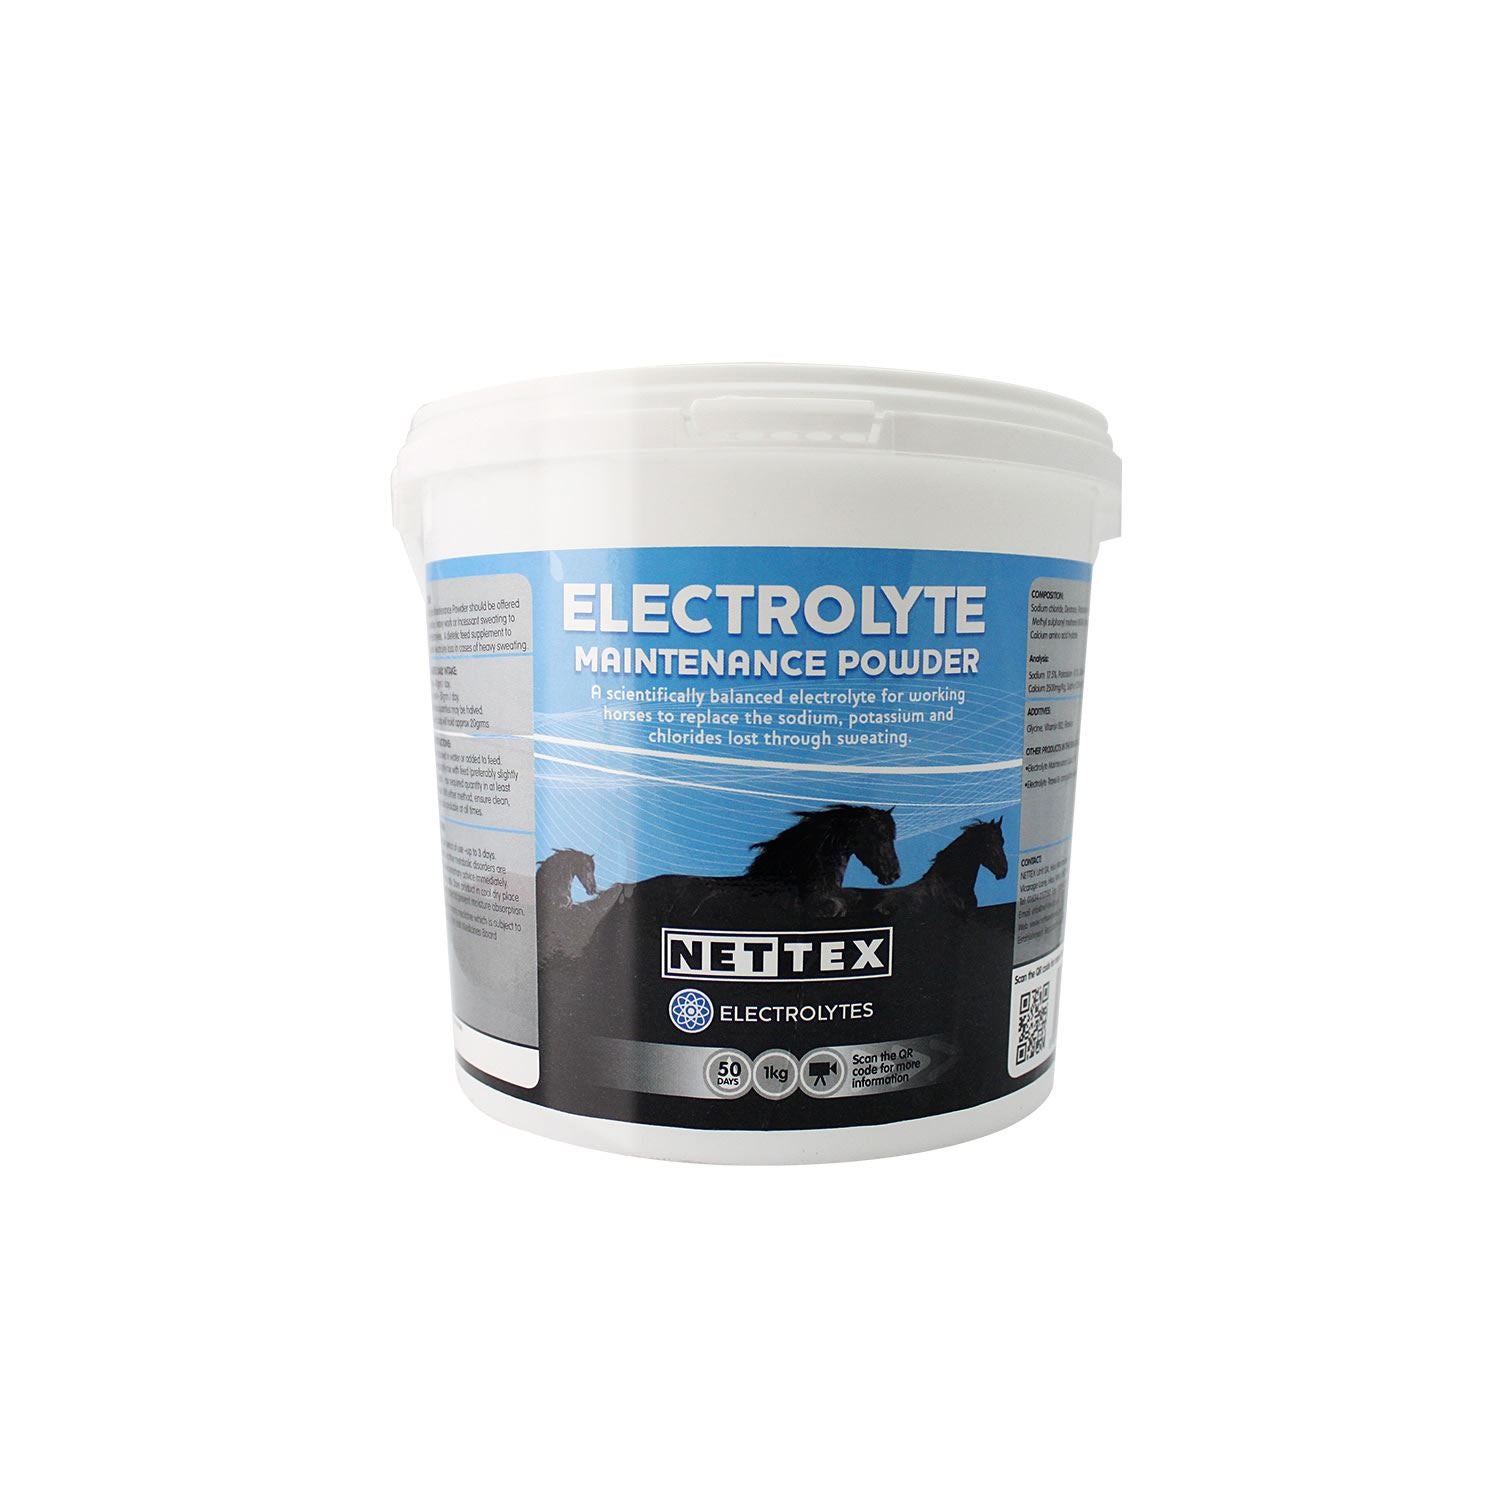 Nettex Electrolyte Maintenancepowder - Just Horse Riders